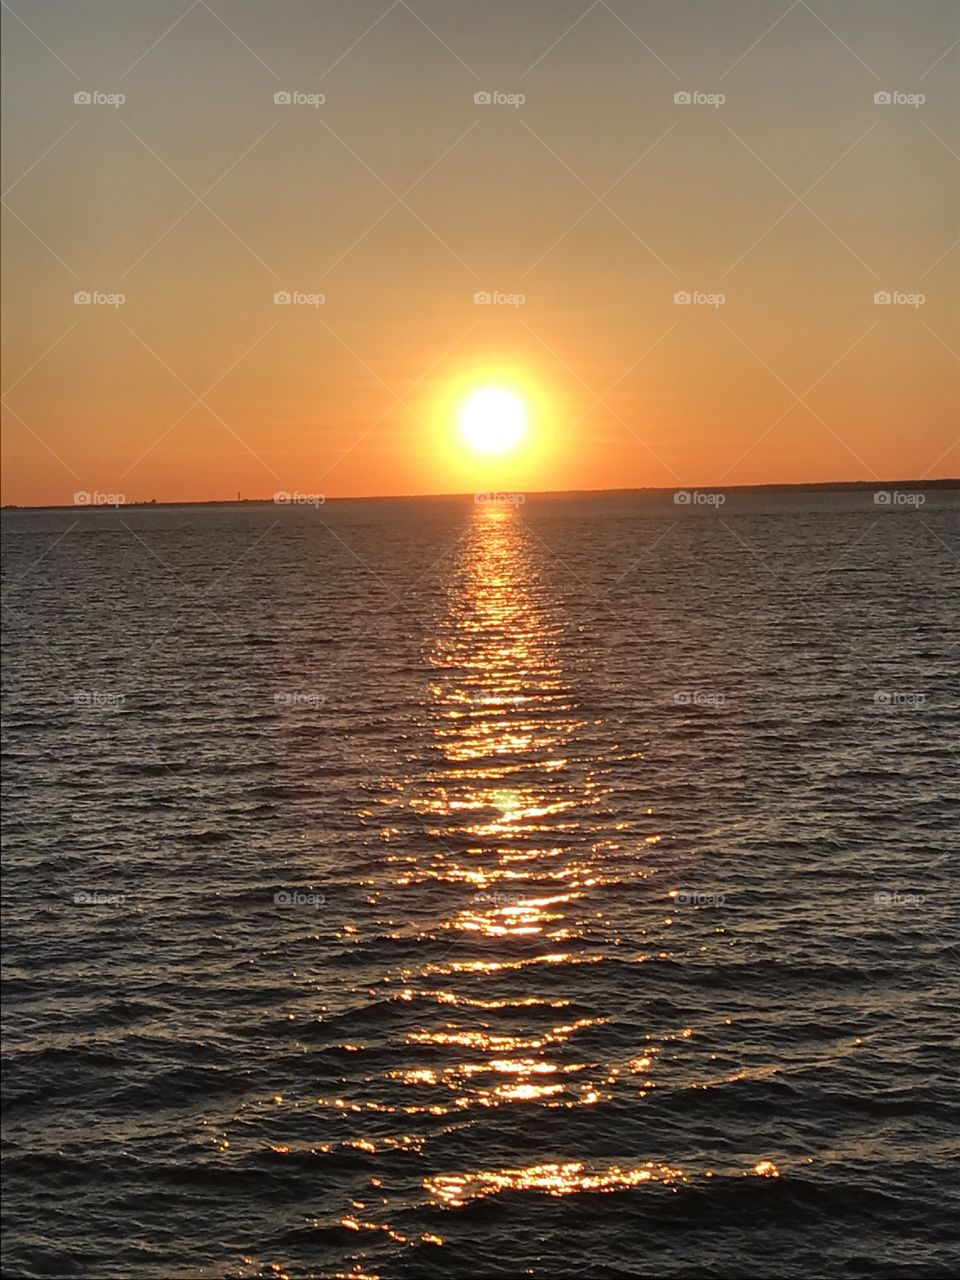 Gorgeous sunset over the Atlantic Ocean 